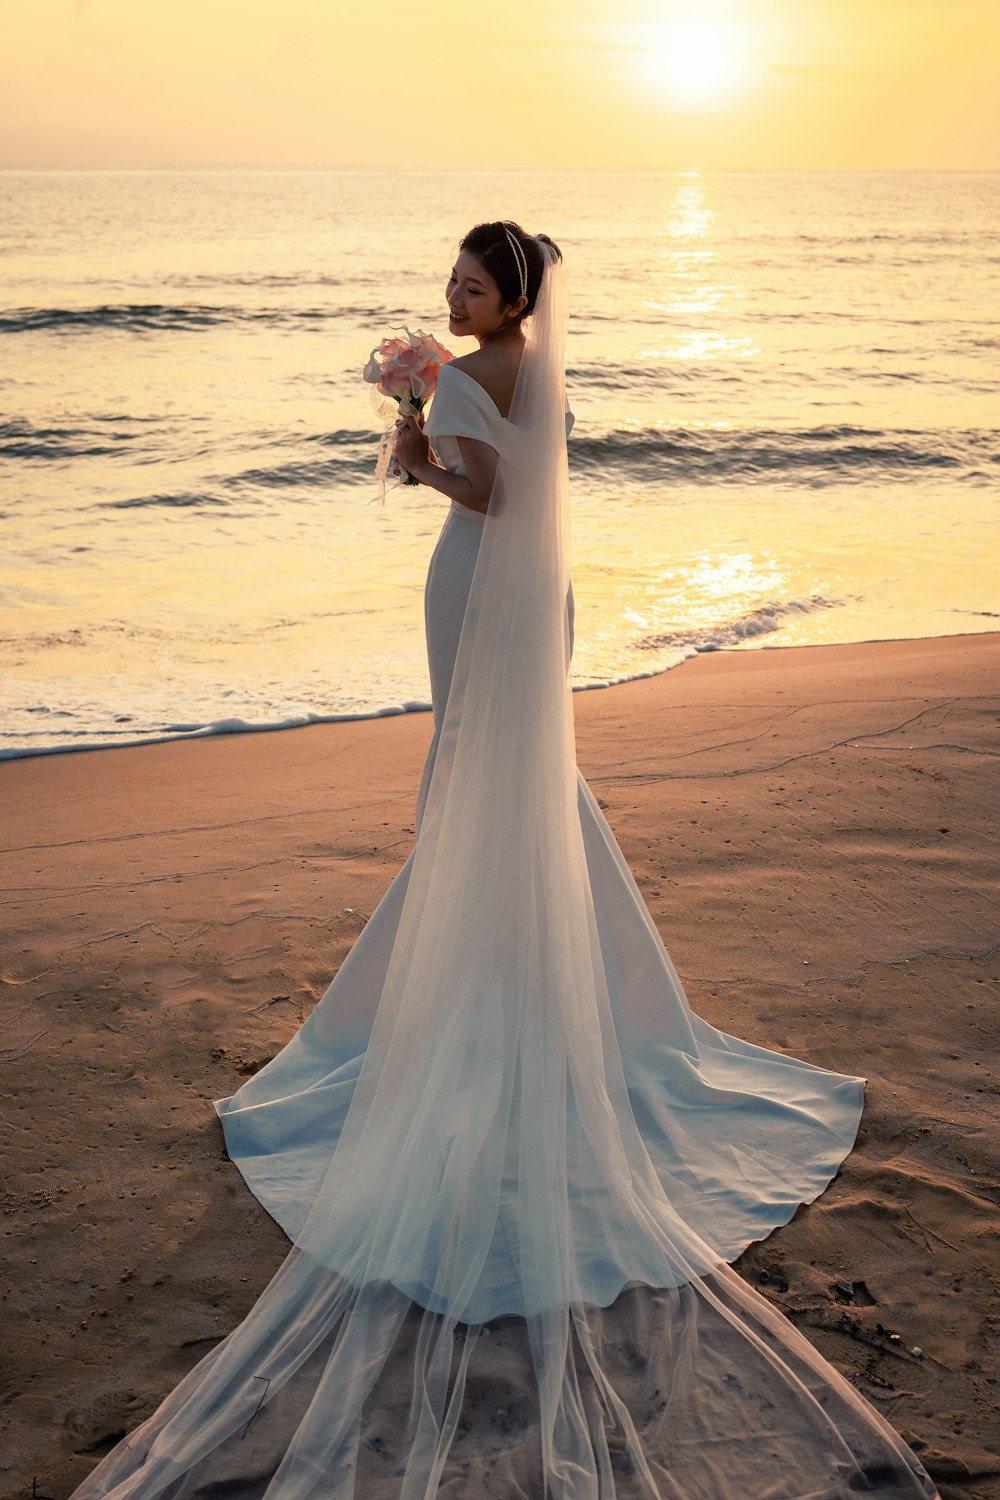 a person in a wedding dress on a beach